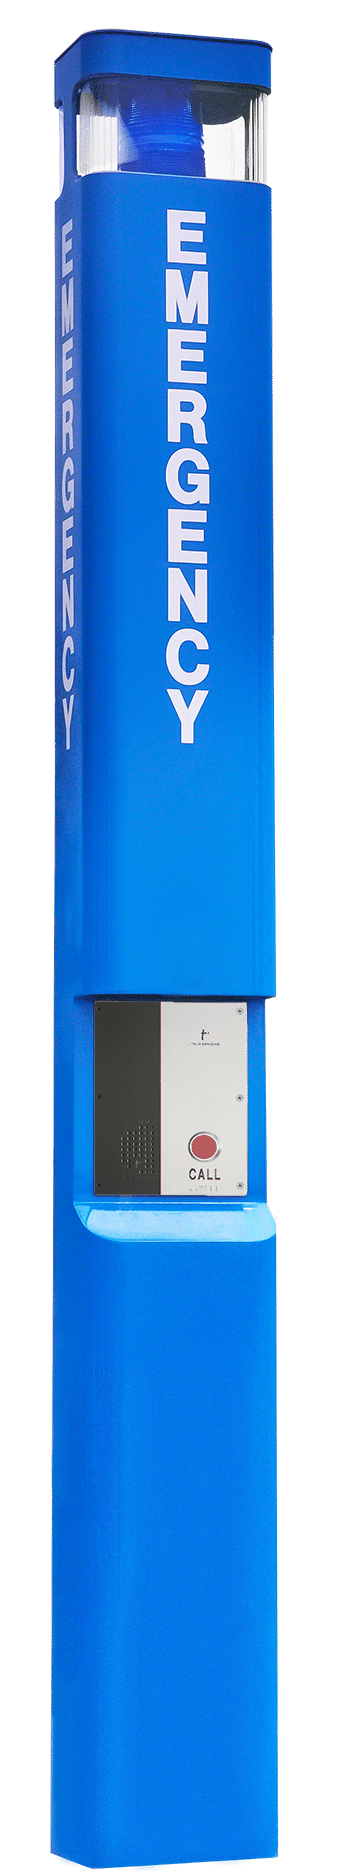 Radius Blue Light Phone Tower